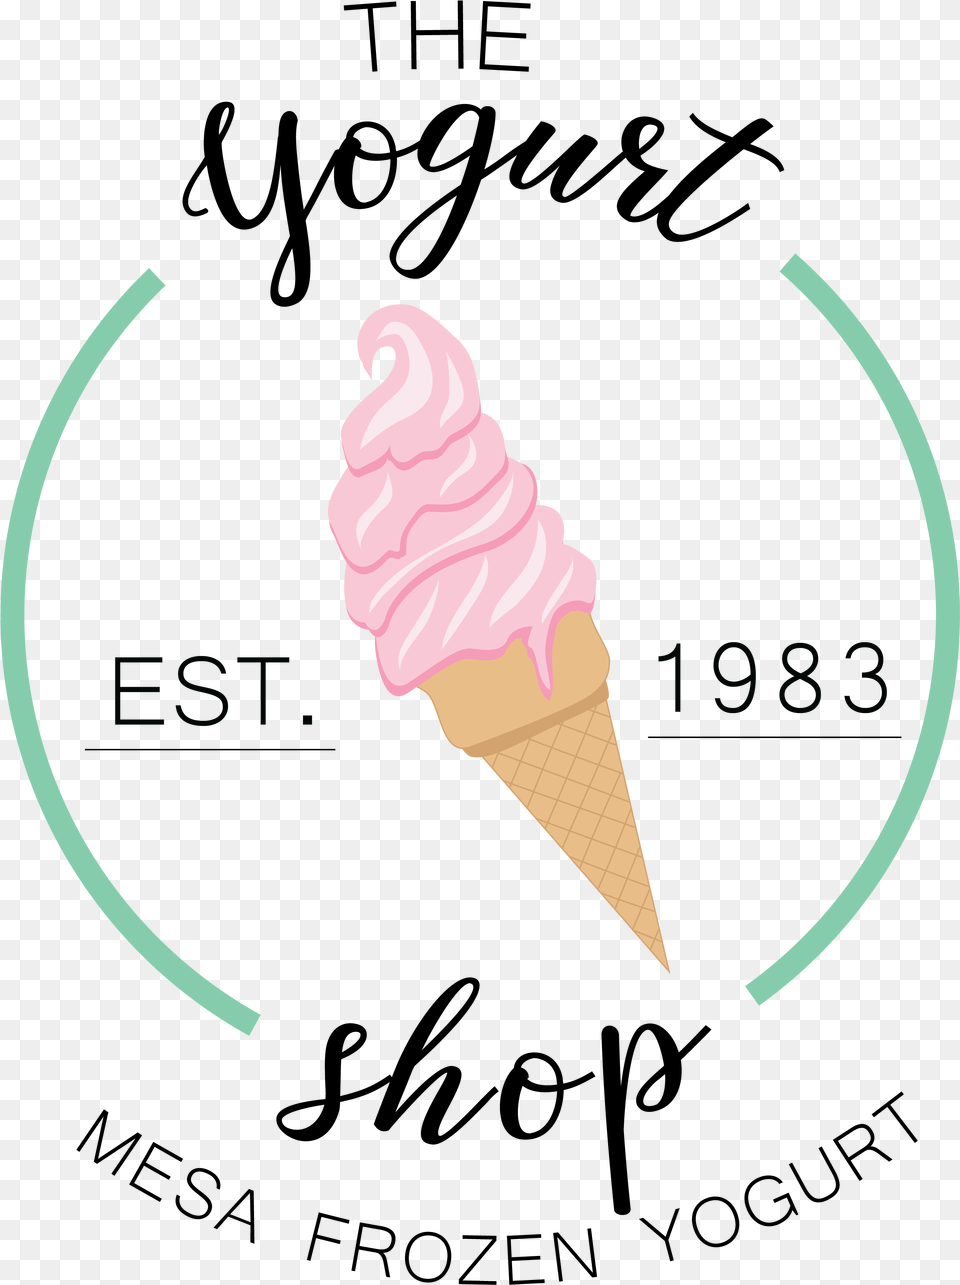 Frozen Yogurt, Cream, Dessert, Food, Ice Cream Png Image